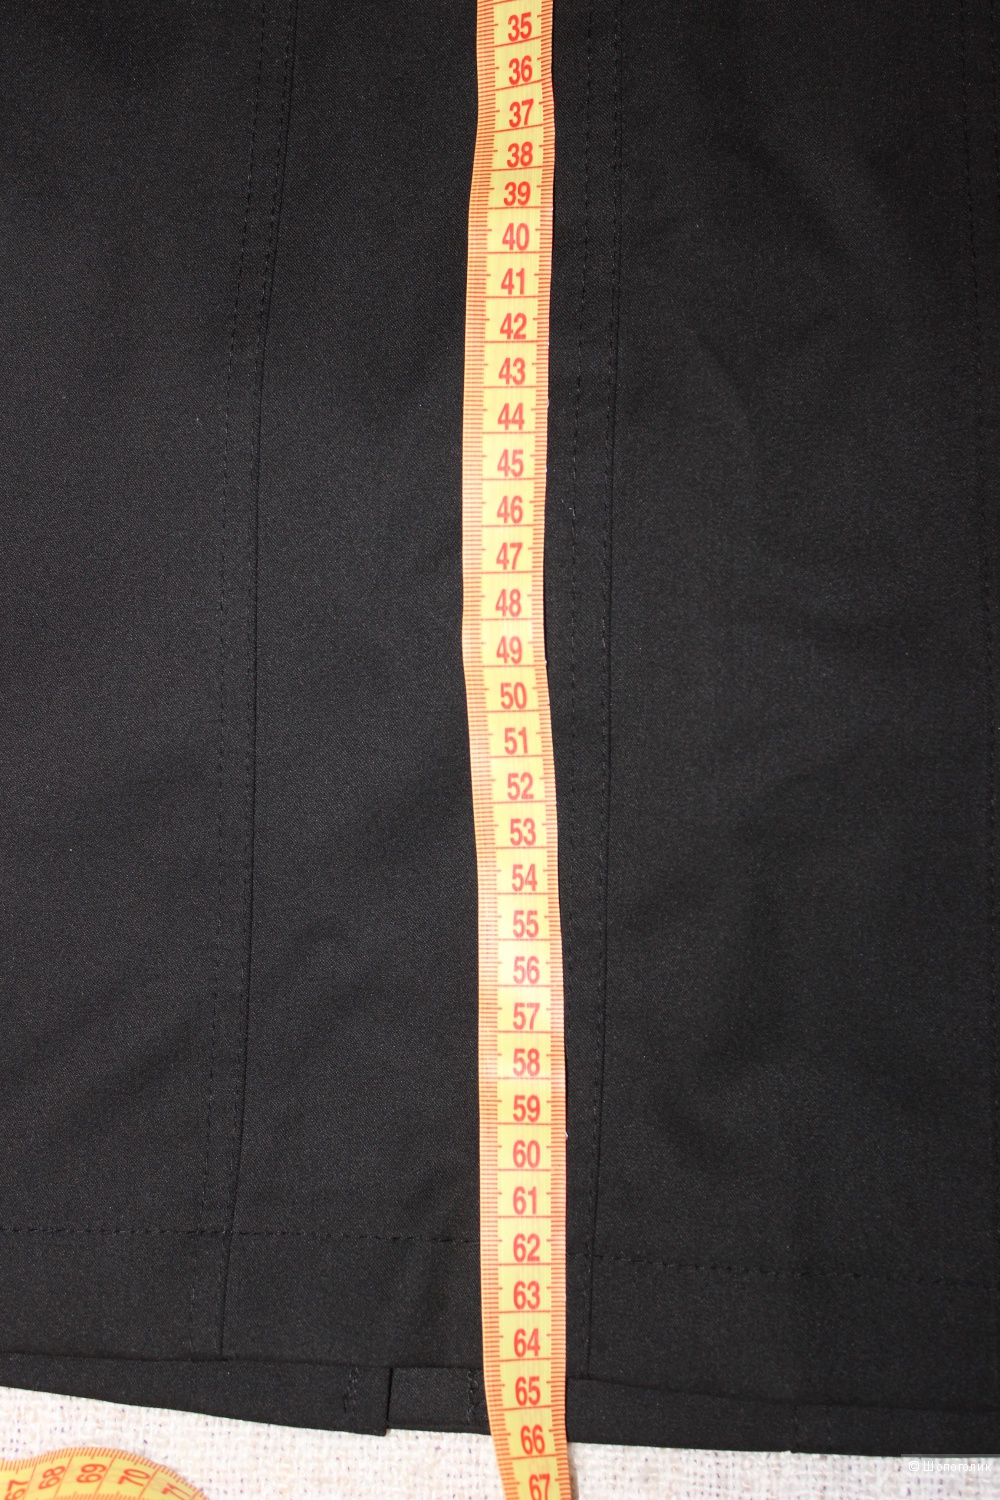 Сарафан-юбка FUSION, размер EUR 42(RUS 48), цвет черный.